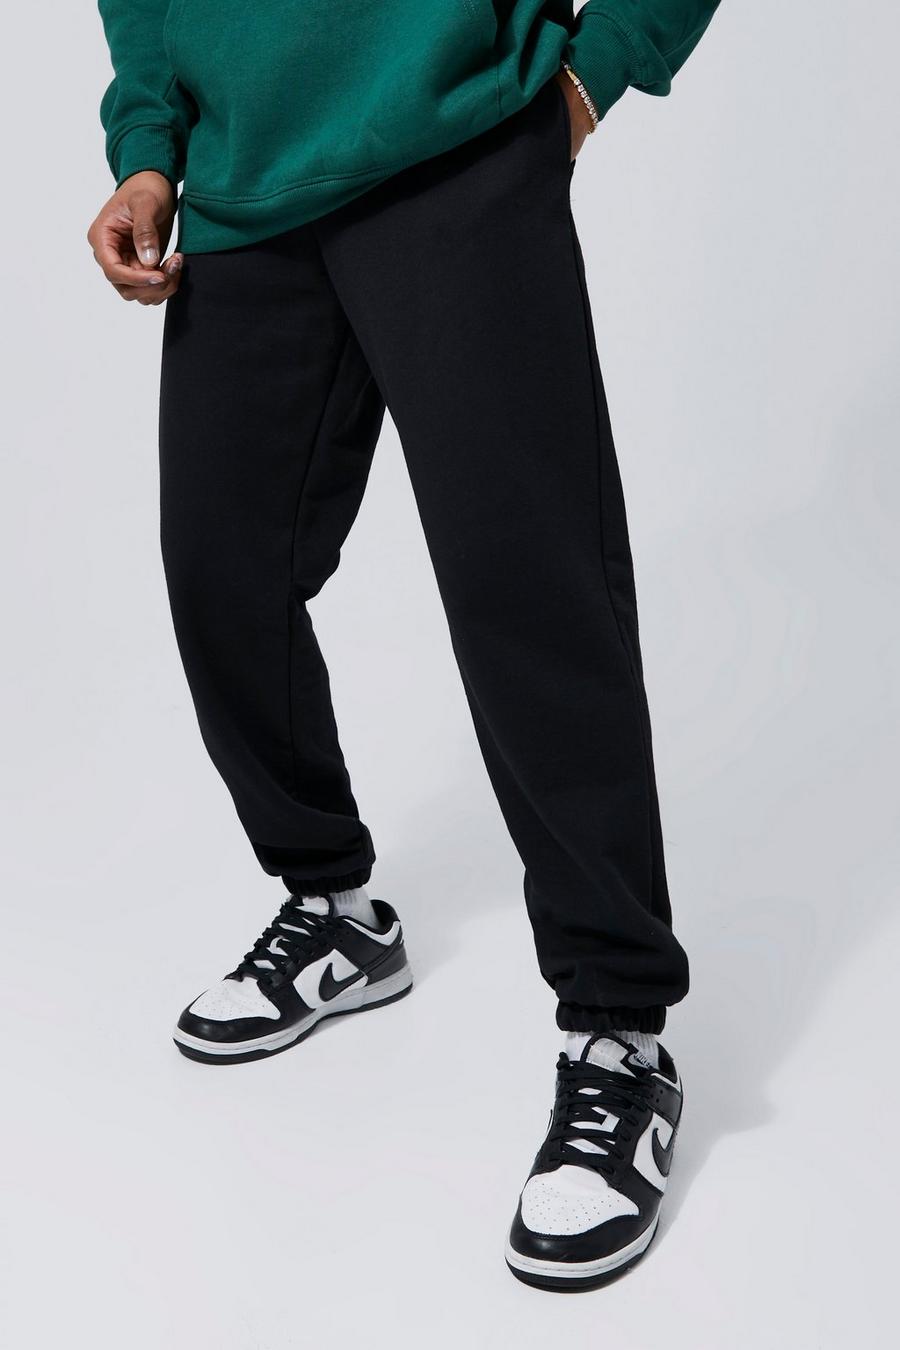 Pantaloni tuta Basic Slim Fit, Black nero image number 1